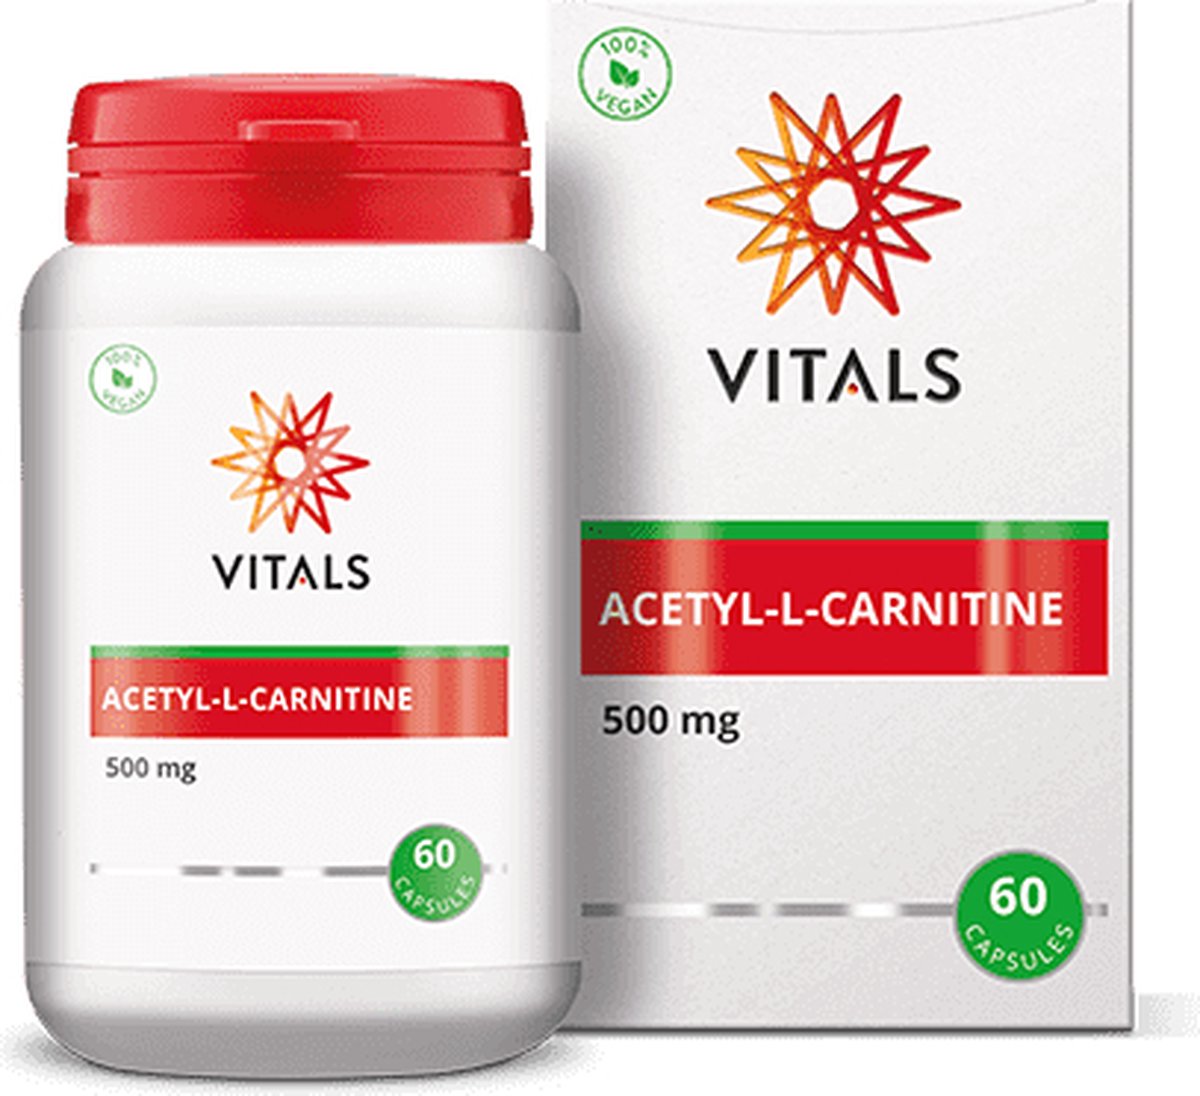 Acetyl-L-carnitine Vitals